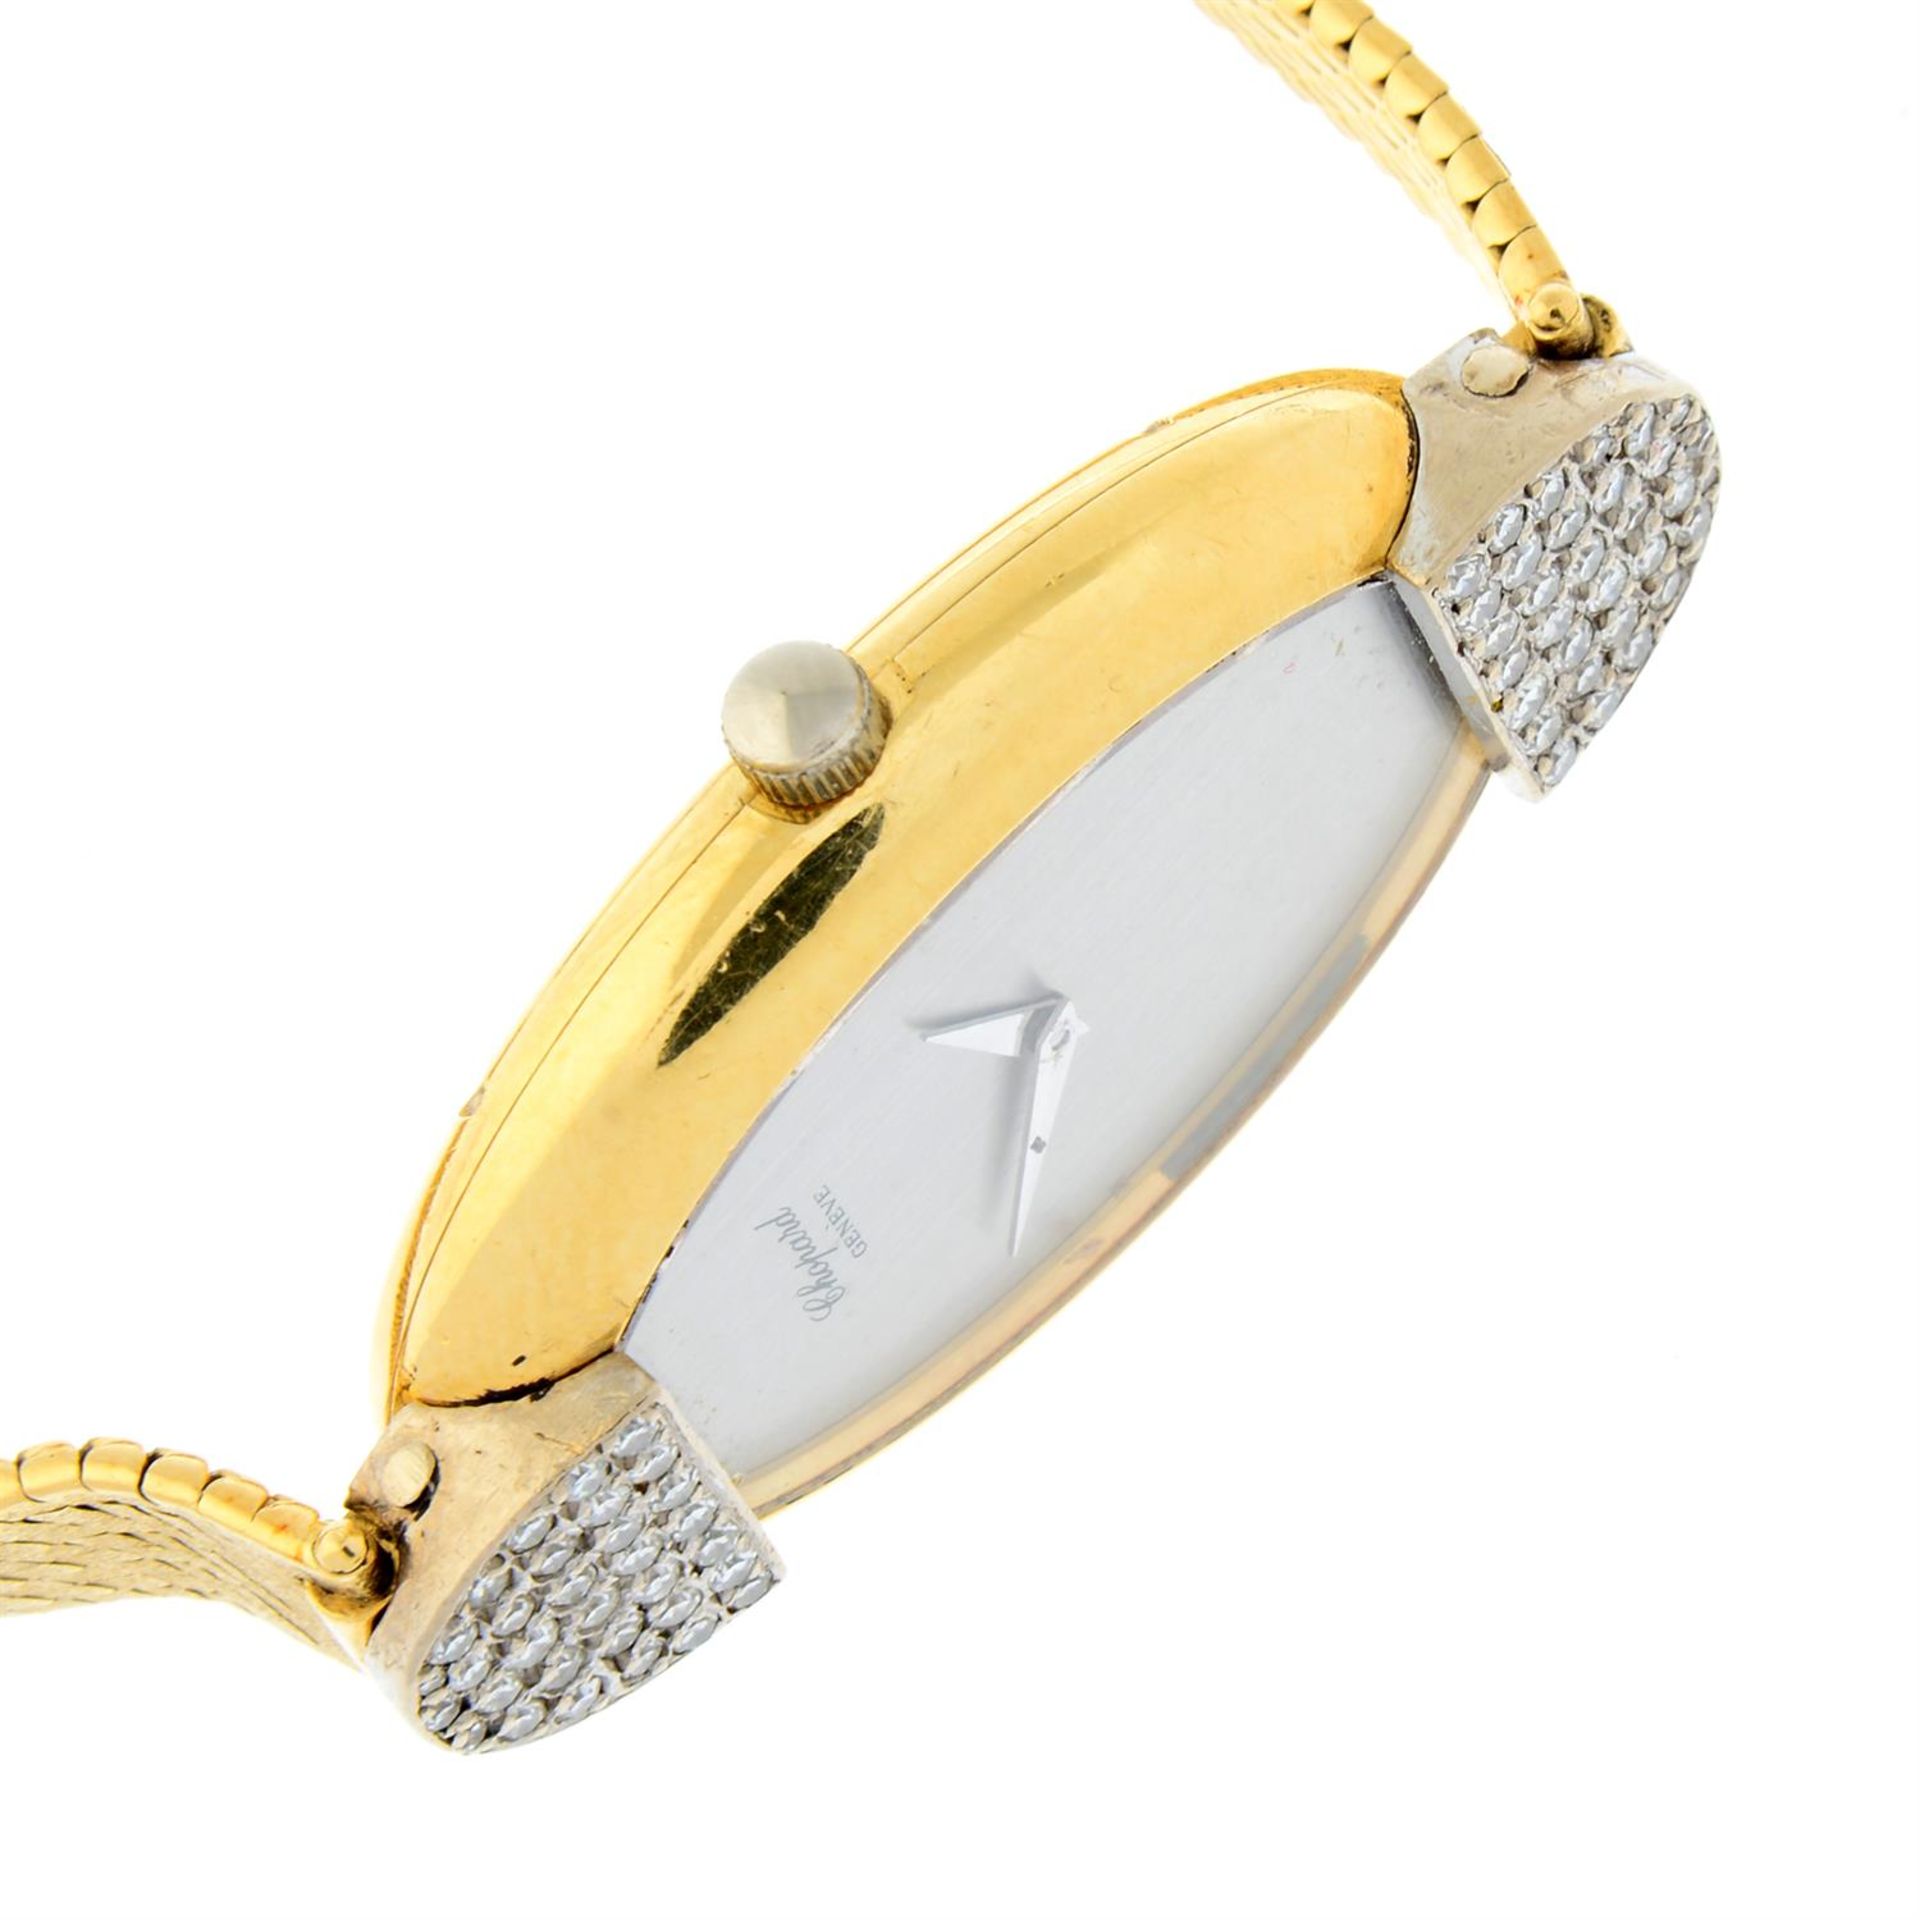 CHOPARD - a diamond set yellow metal bracelet watch, 22mm. - Image 3 of 5